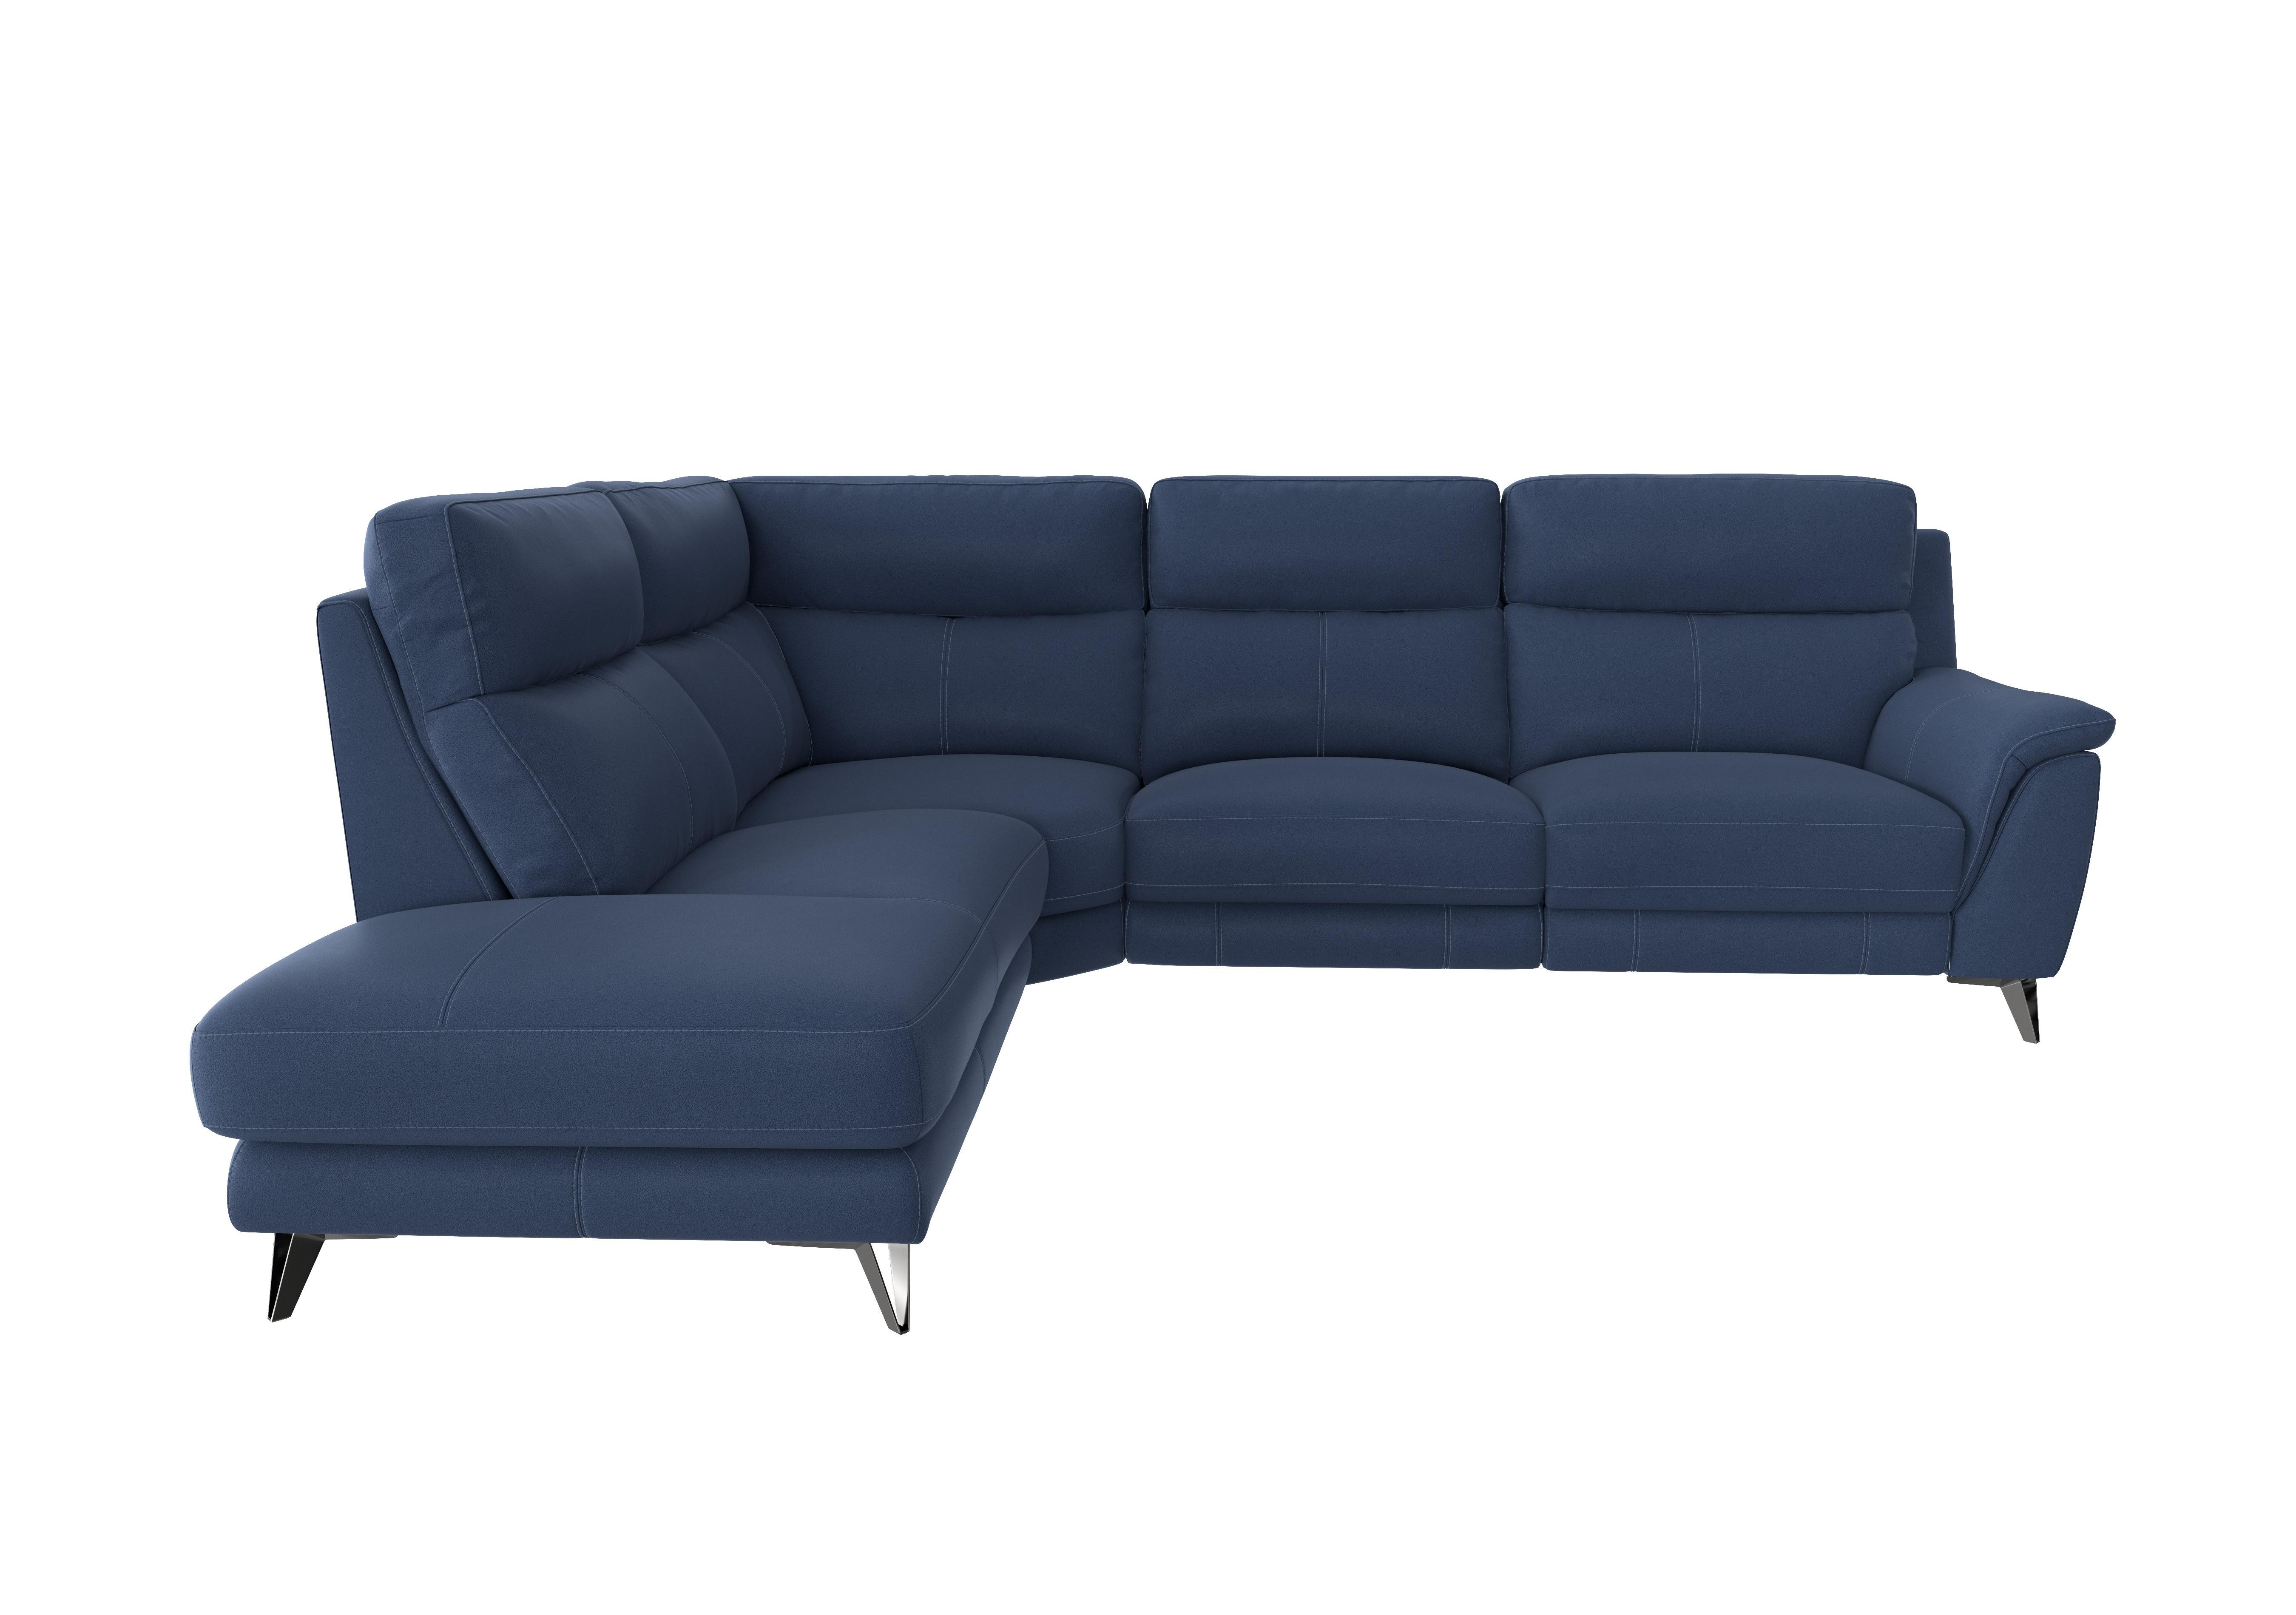 Contempo 3 Seater Chaise End Fabric Sofa in Bfa-Blj-R10 Blue on Furniture Village